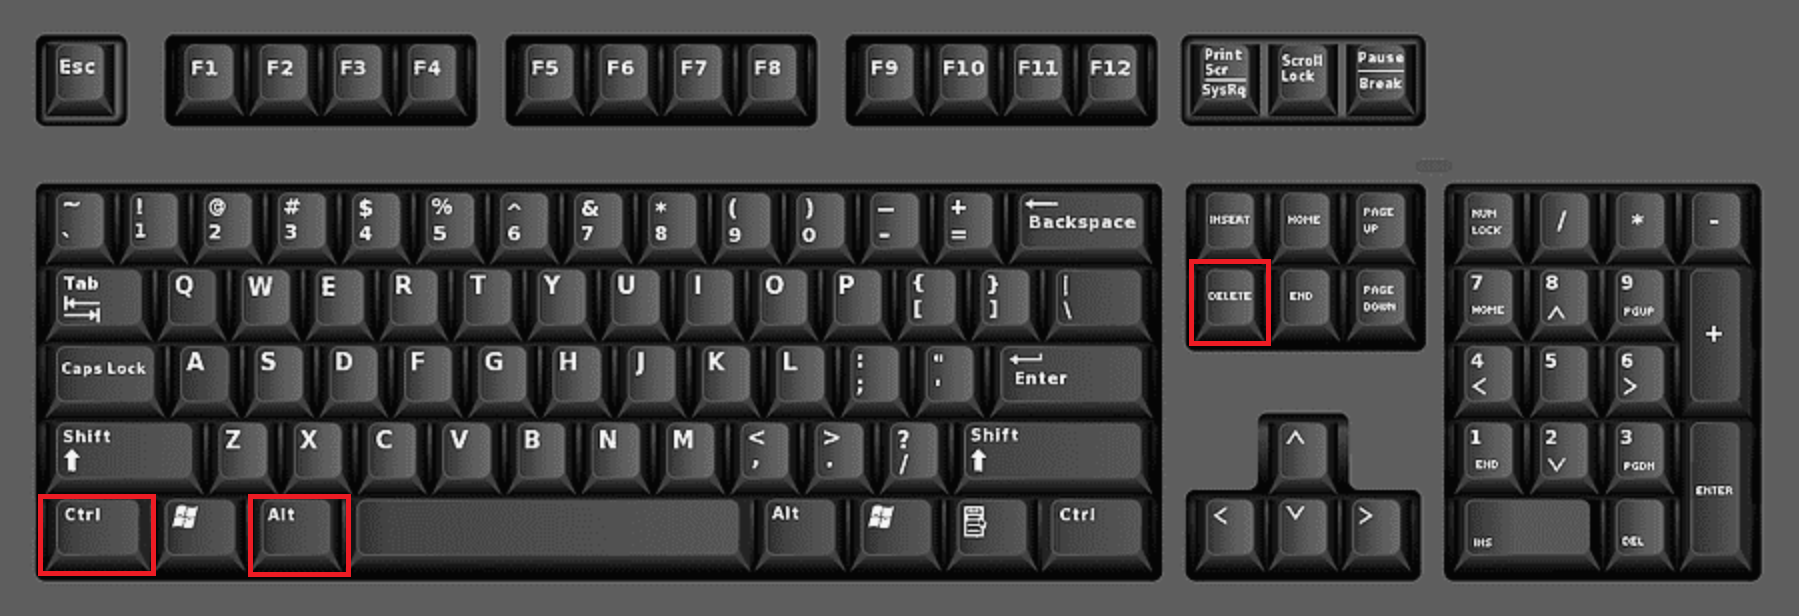 Id alt. Клавиша Numpad 1. Numpad 1 на клавиатуре. Контрол шифт на клавиатуре. Numpad 5 на клавиатуре.